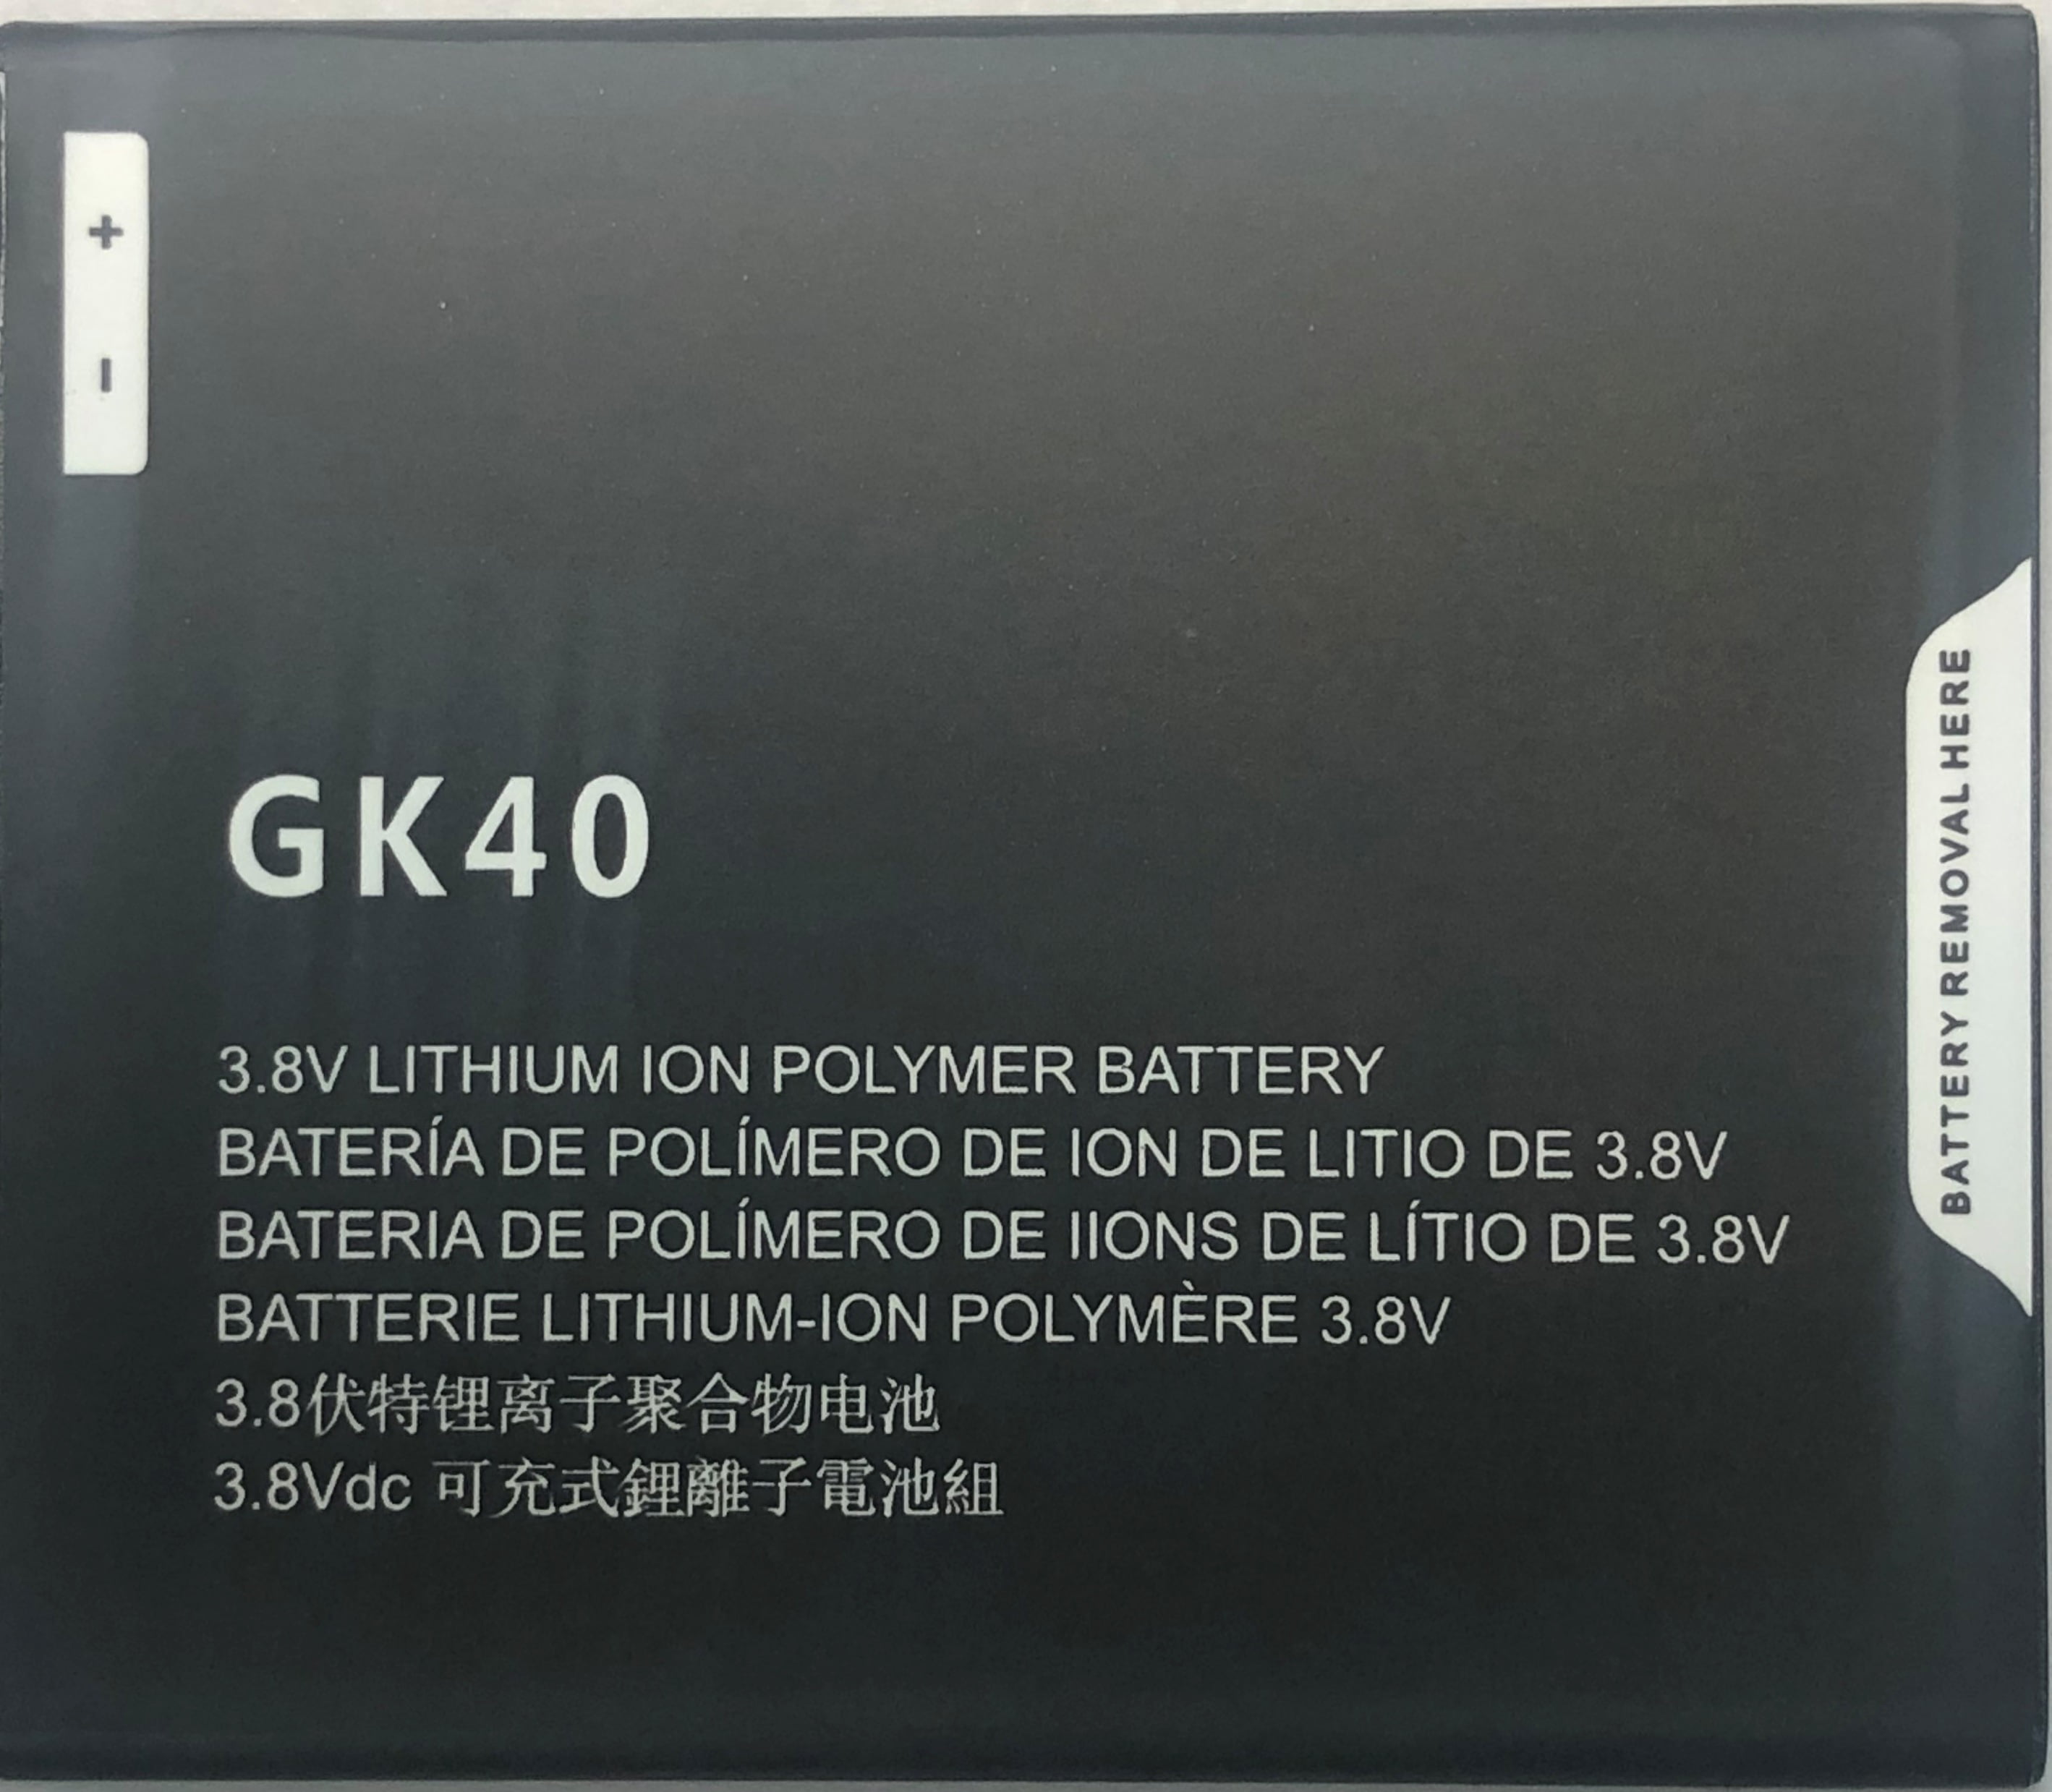  Battery for Motorola GK40, 3100mAh High Capacity Li-ion  Replacement Battery for Moto G4 Play XT1607, Moto G5 XT1601, Moto E3, Moto  E4, XT1603, XT1675 : Cell Phones & Accessories